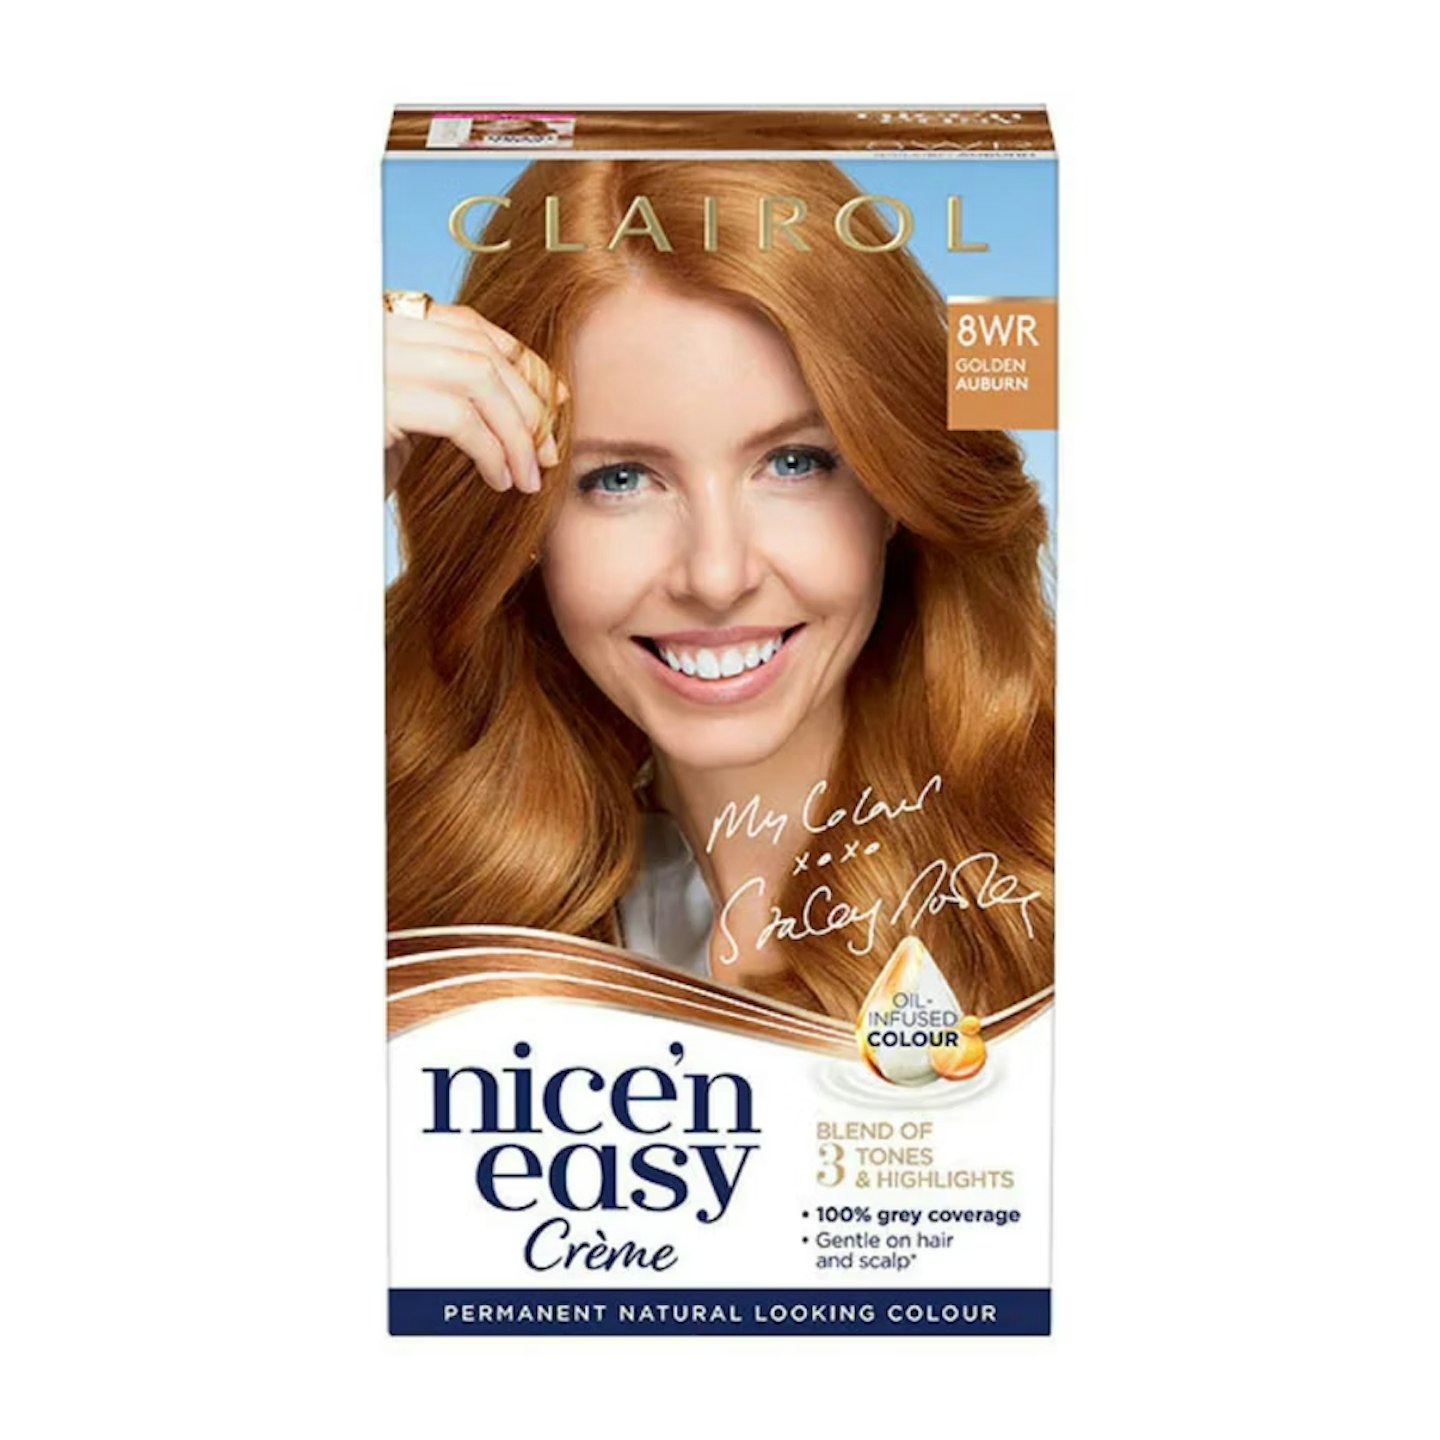 Clairol Nice'n Easy Crème Oil Infused Permanent Hair Dye, Golden Auburn